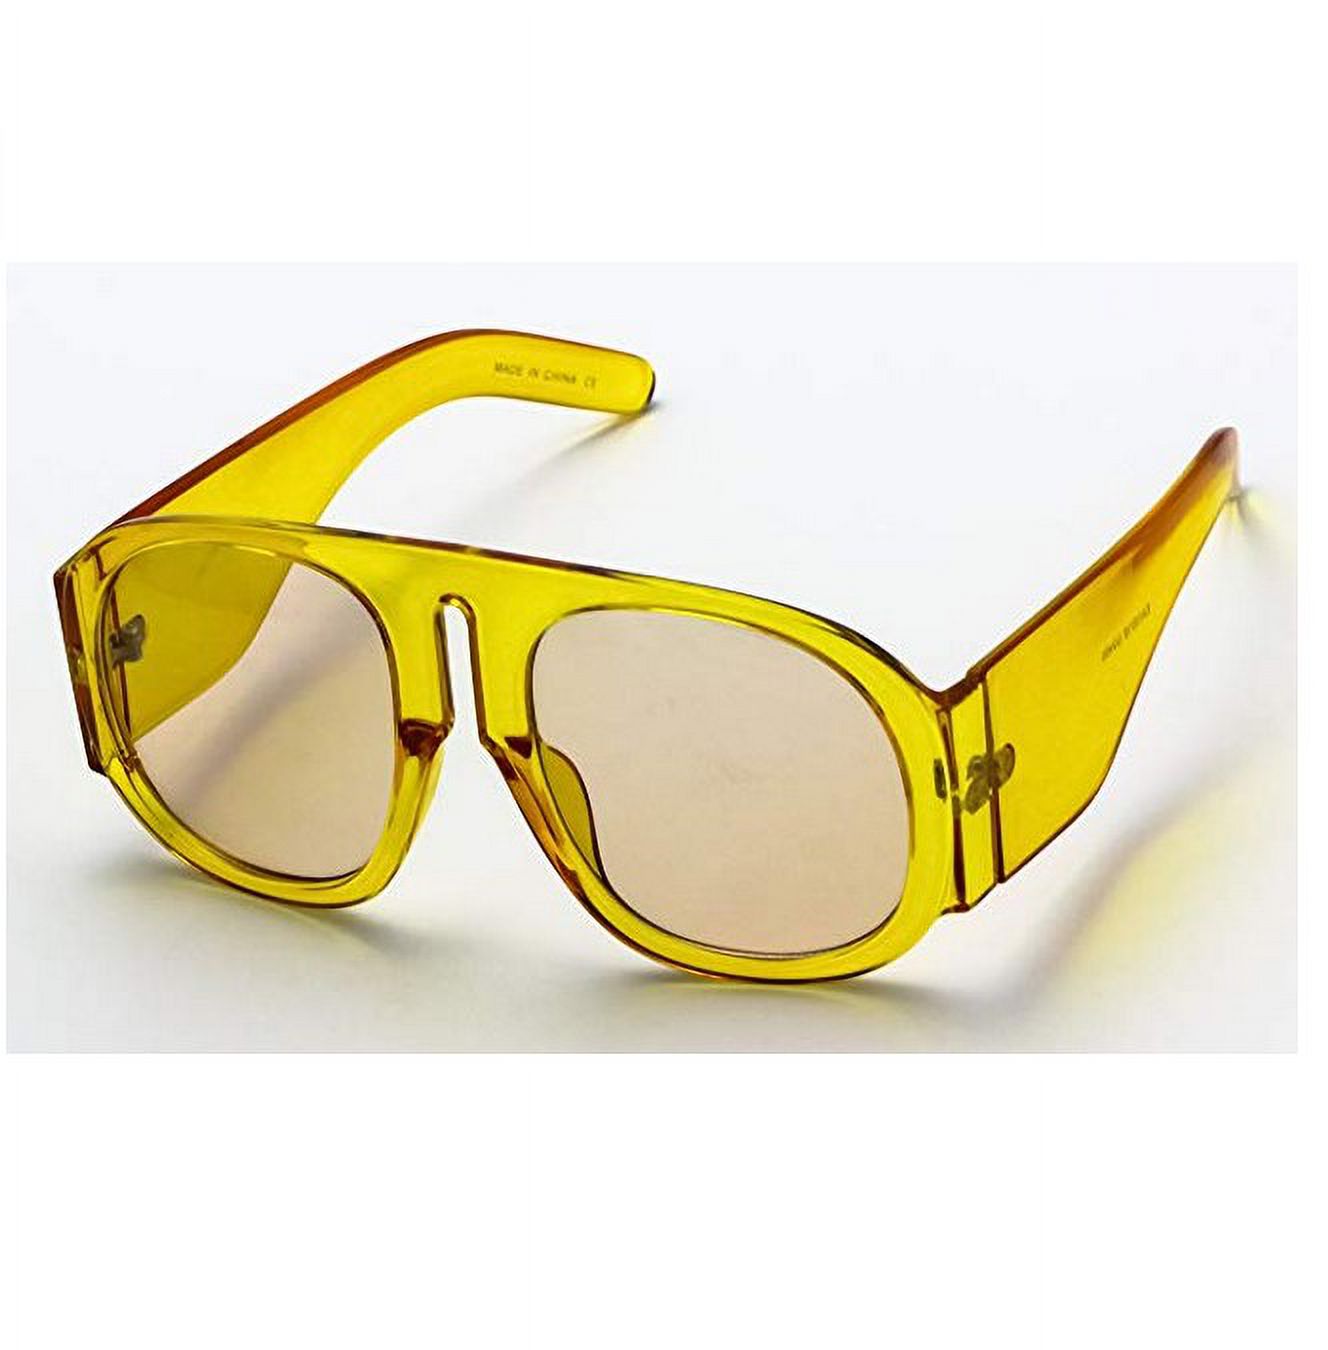 Oversize Goggle Frame Sunglasses Gradient Lens Vintage Women Fashion Shades - image 2 of 4